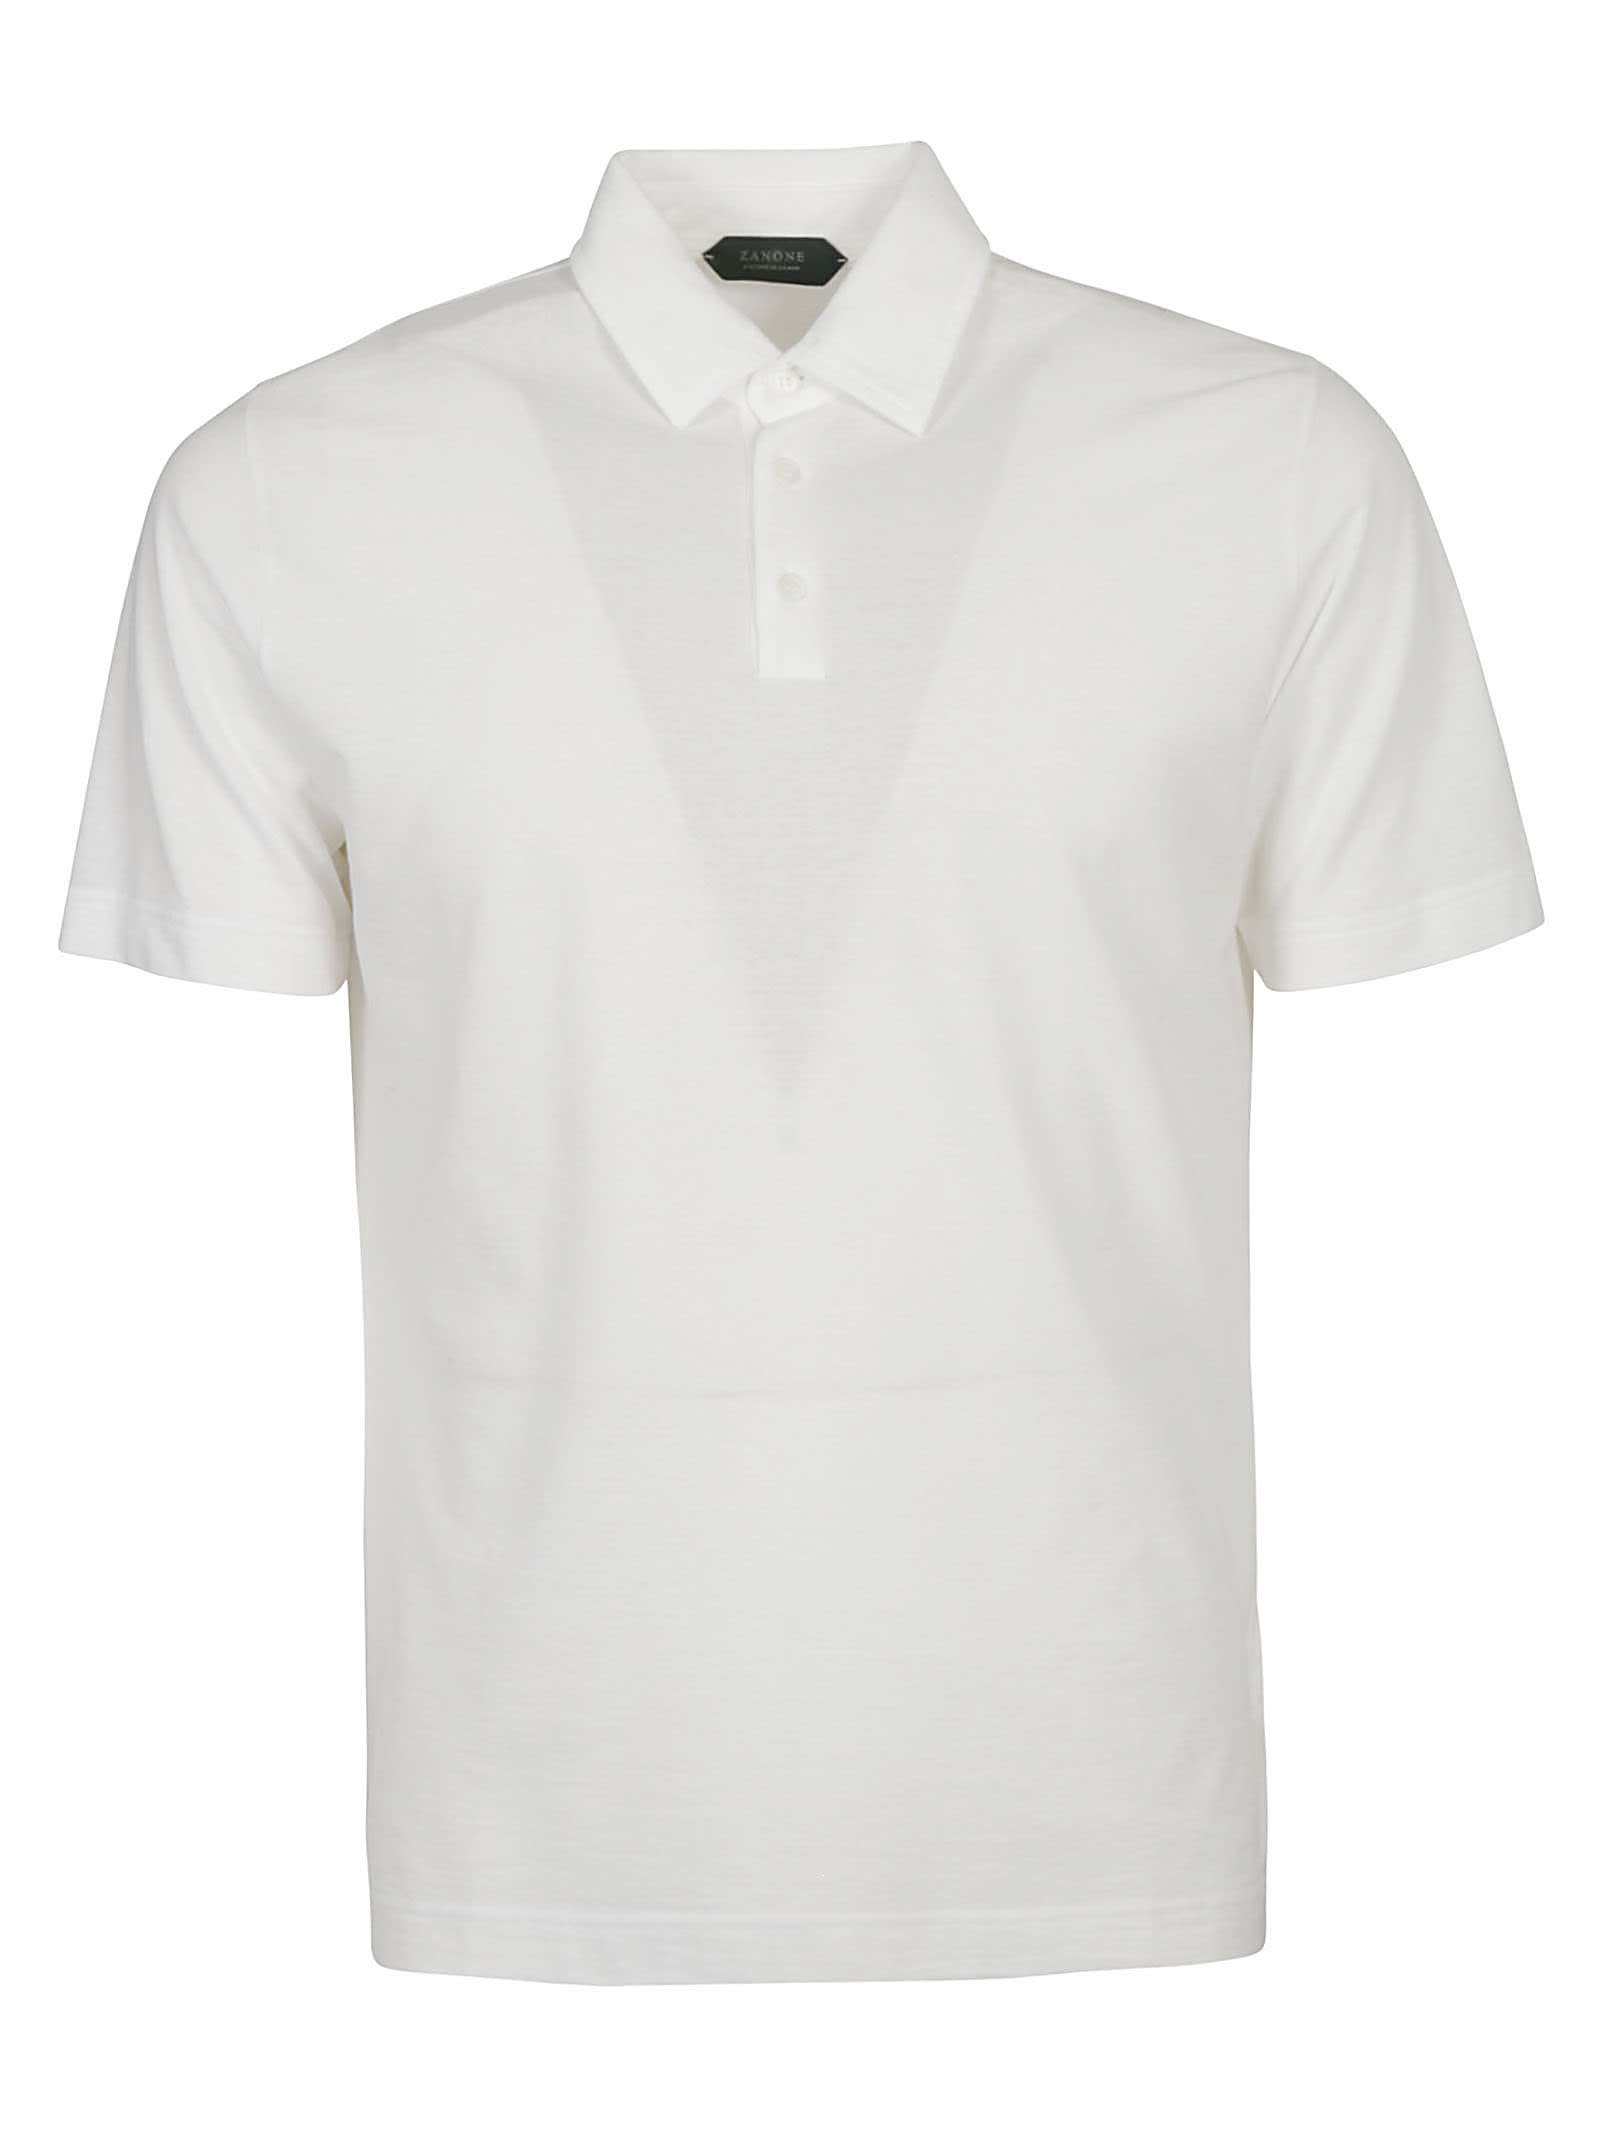 Incotex Plain Classic Polo Shirt